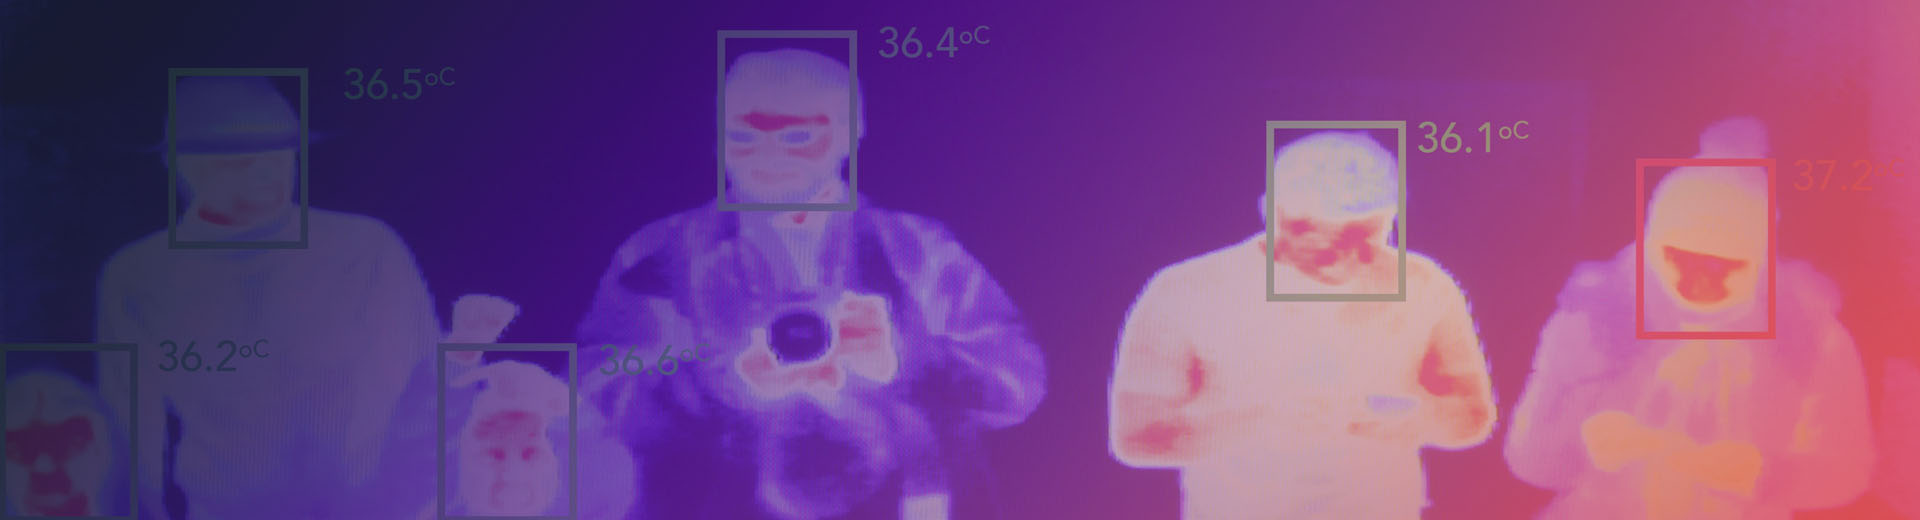 Thermal screening image